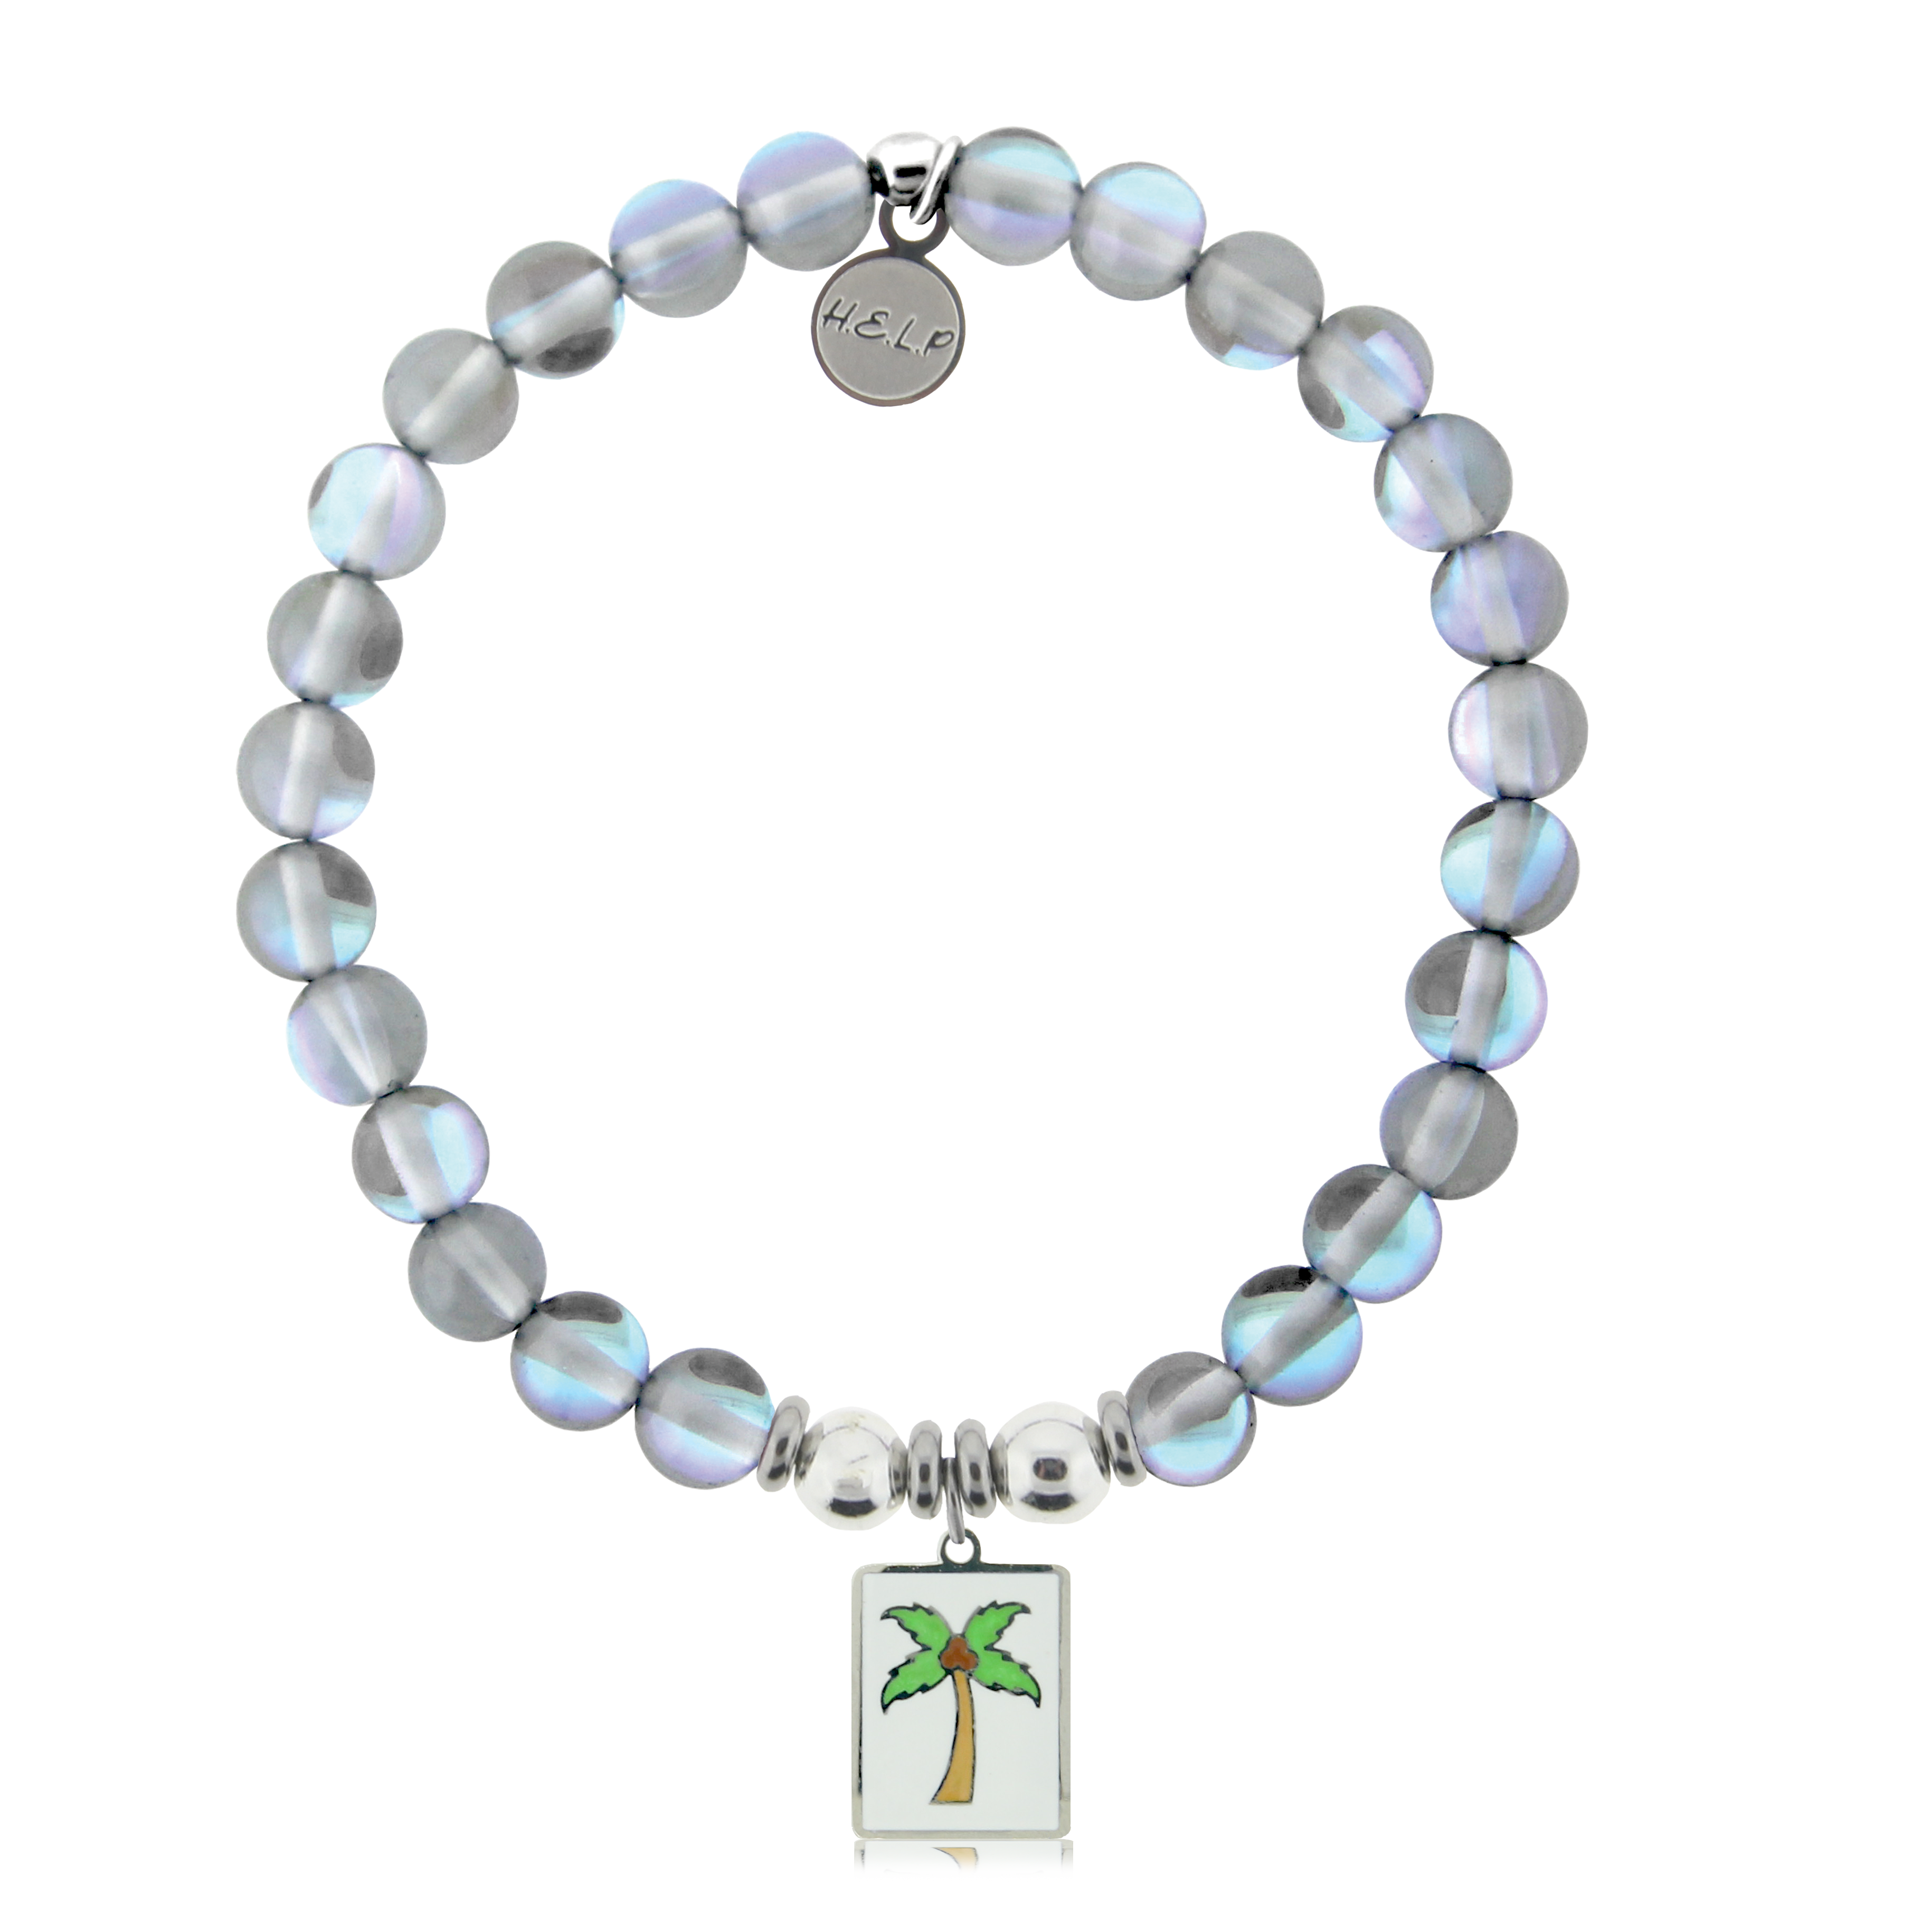 HELP by TJ Palm Tree Enamel Charm with Grey Opalescent Charity Bracelet